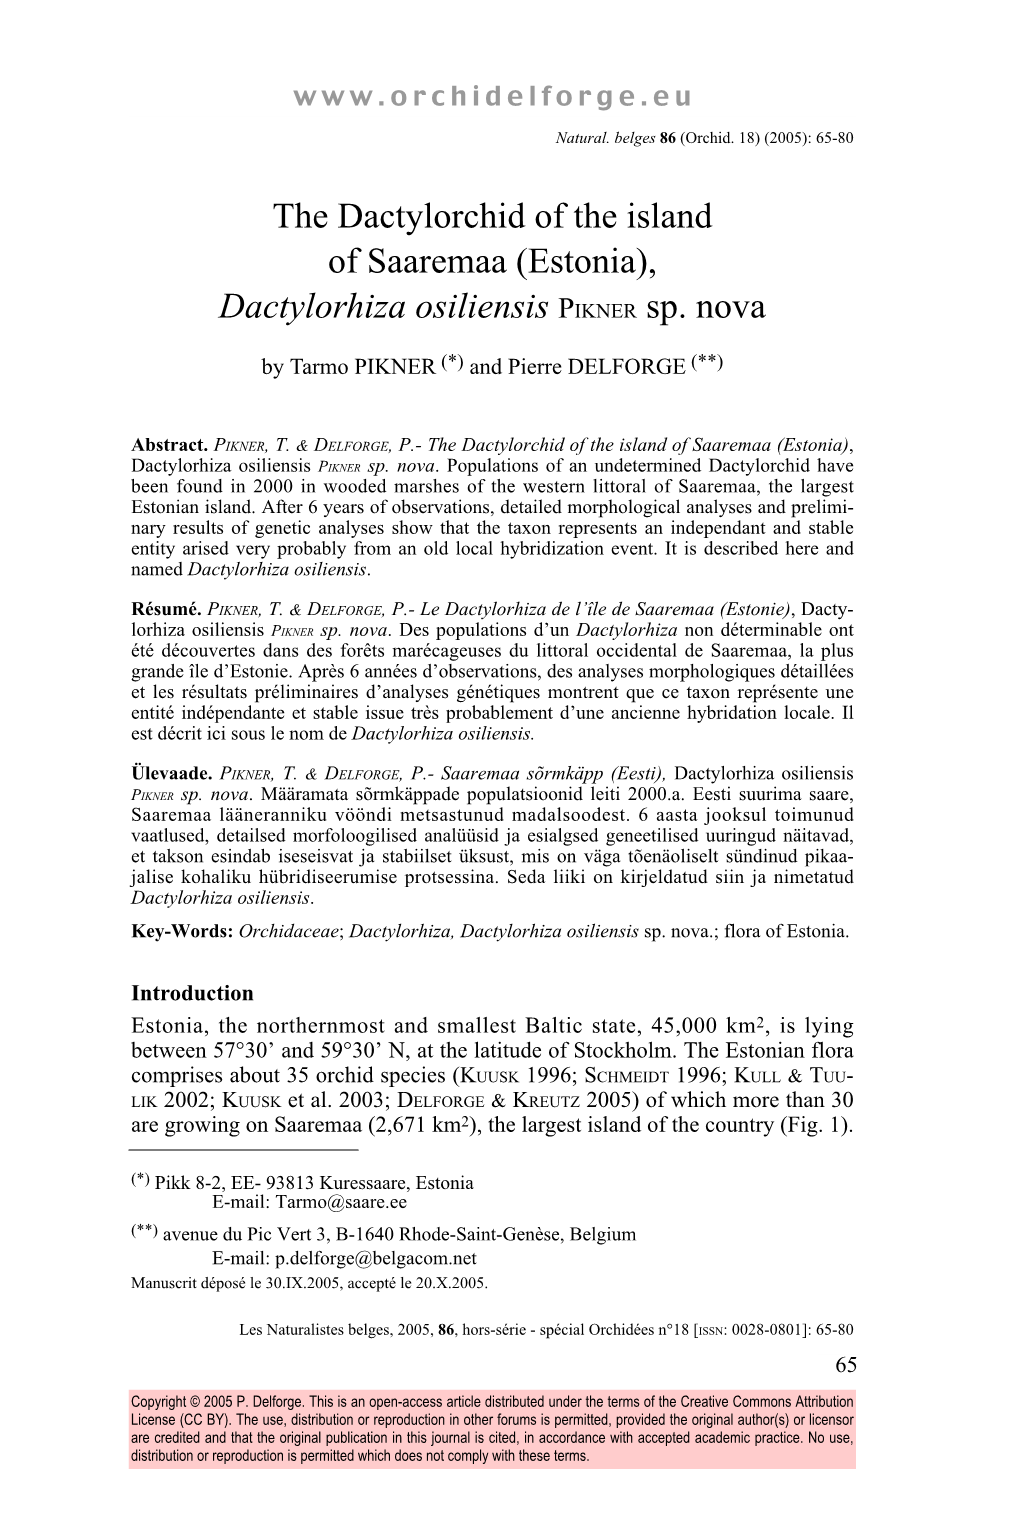 The Dactylorchid of the Island of Saaremaa (Estonia), Dactylorhiza Osiliensis PIKNER Sp